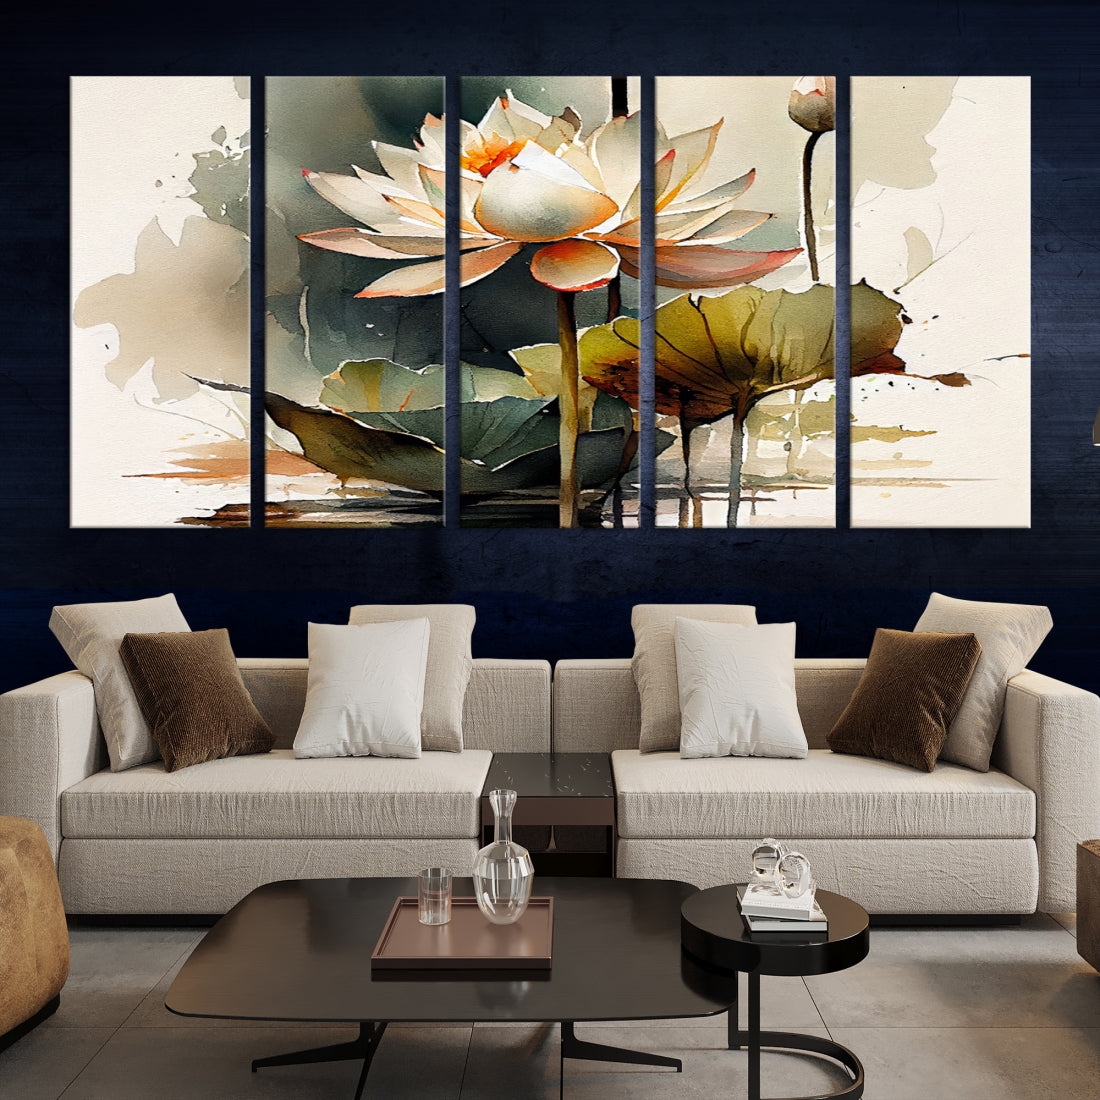 White Lotus Wall Art Floral Canvas Print, Lotus Flower Art Print, Set of 3 Wall Decor for Living Room